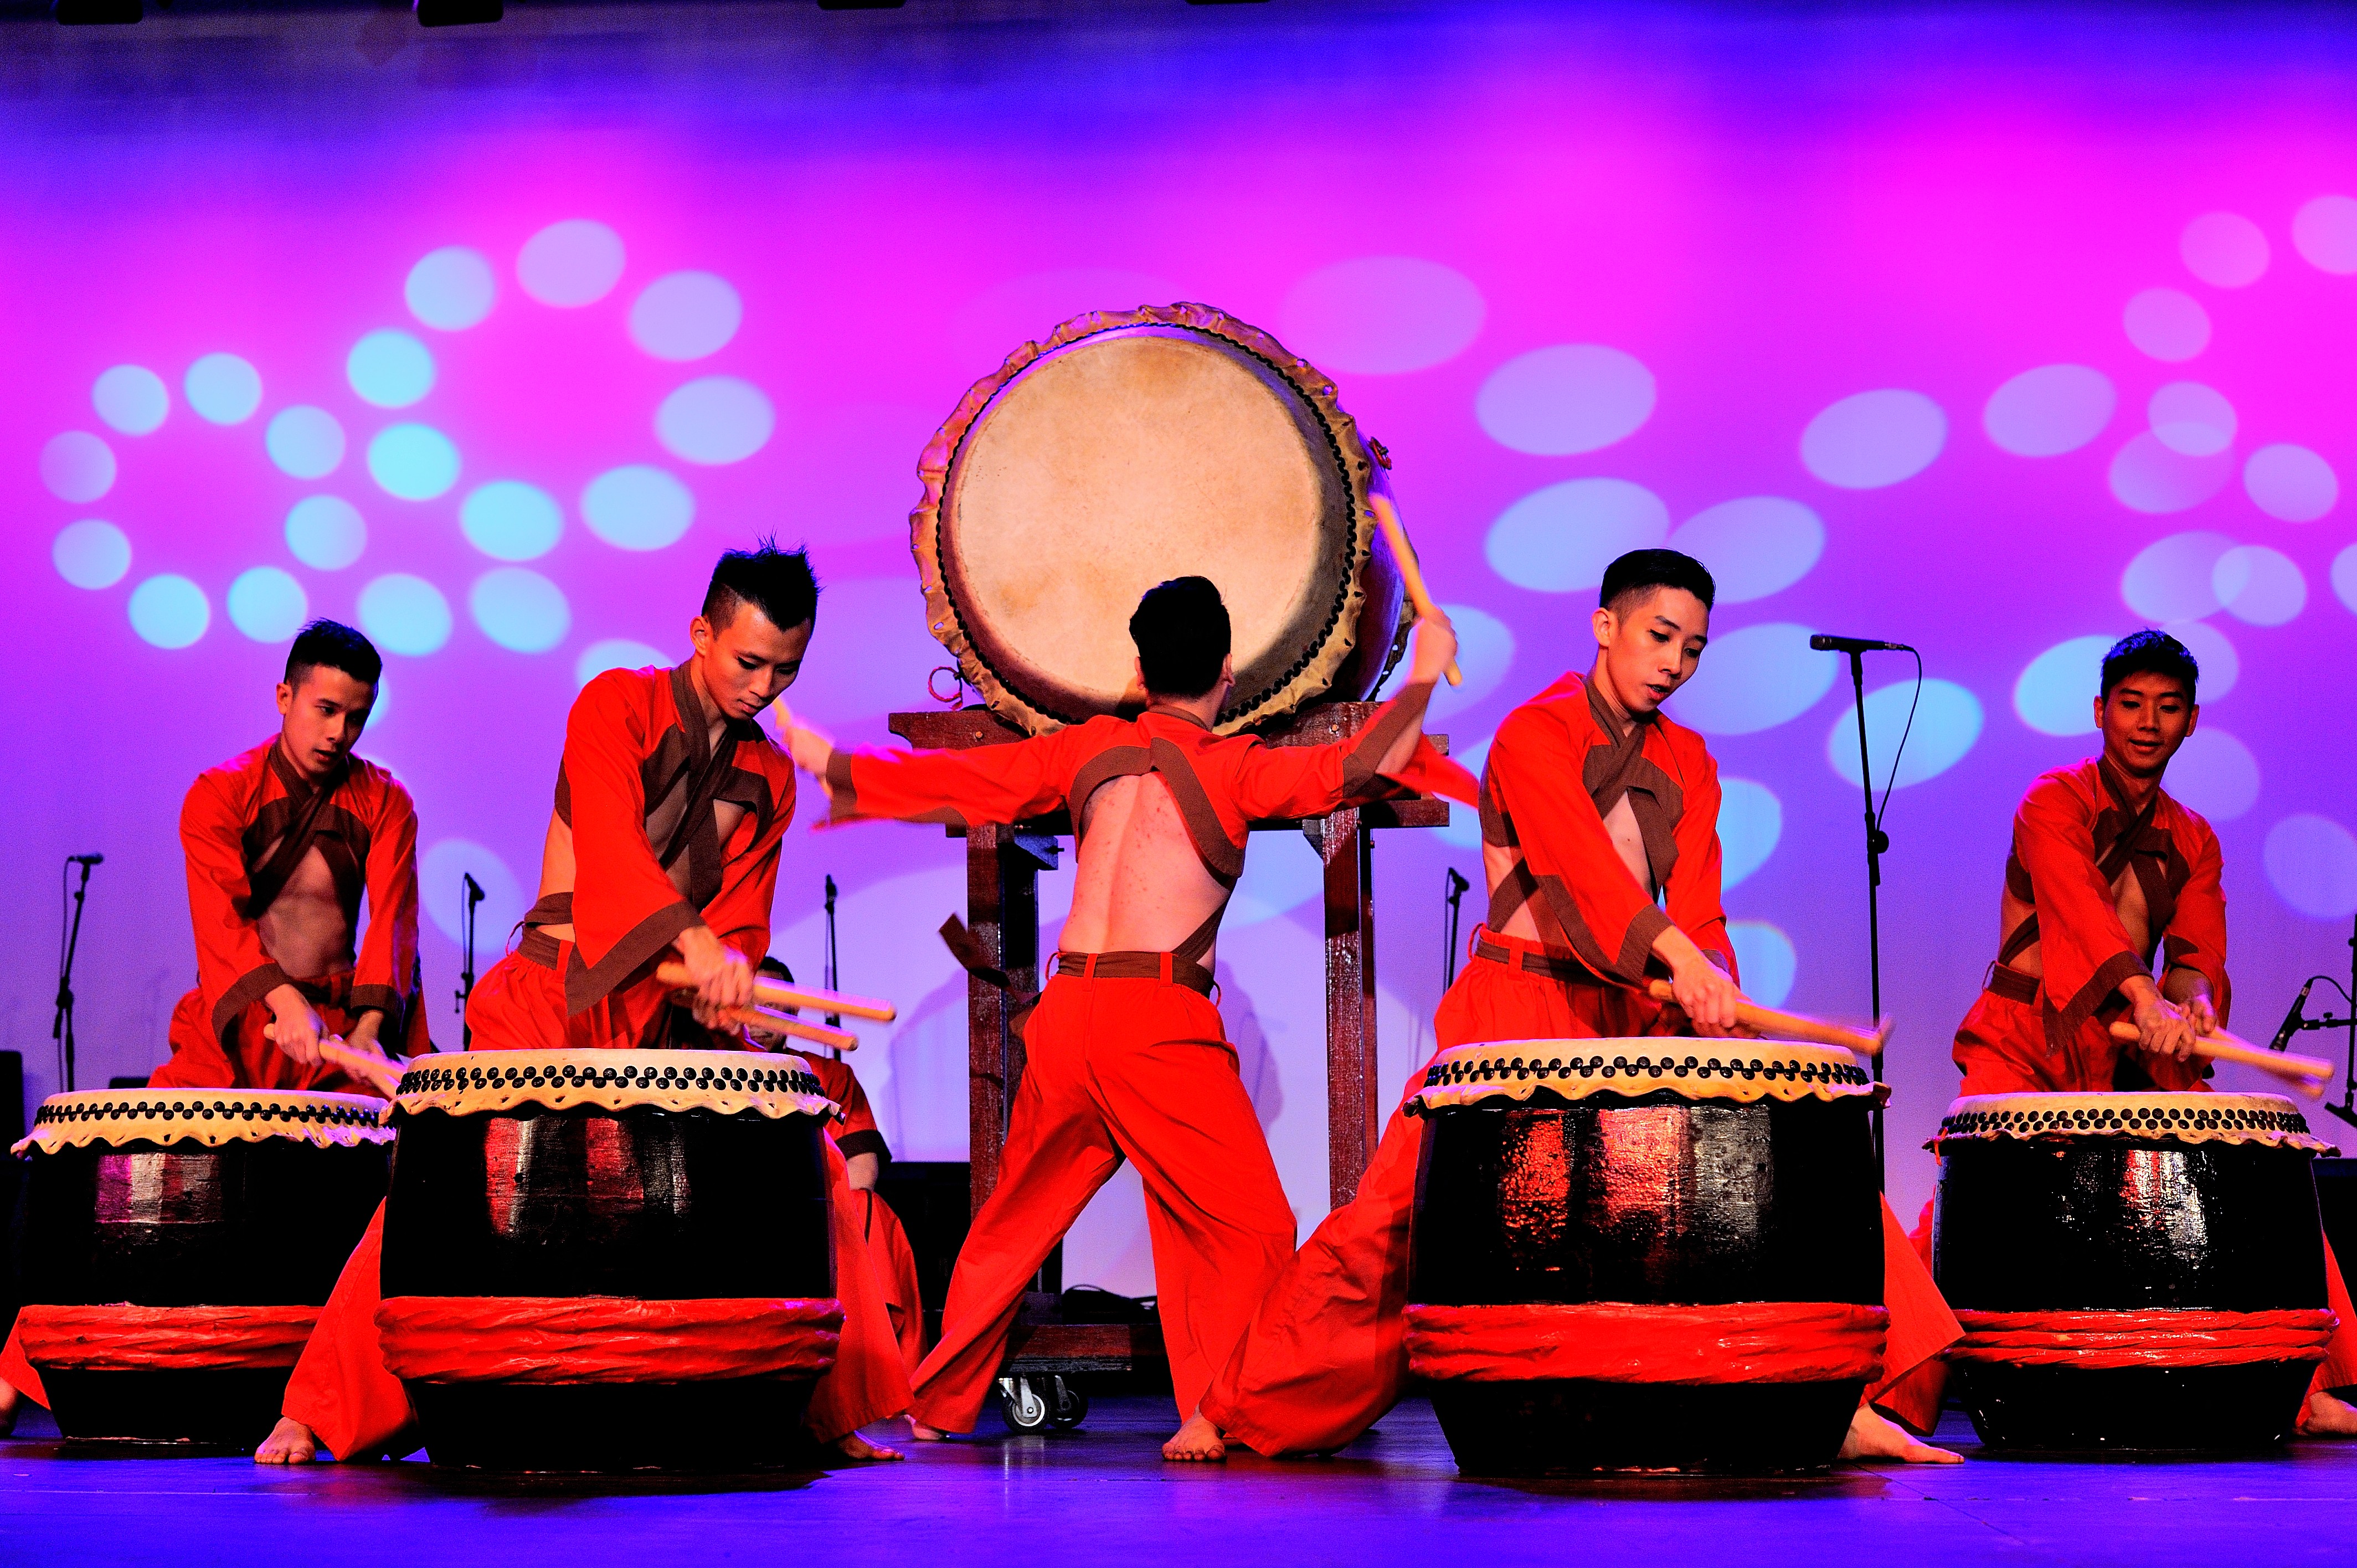 Festifolk, Festival mondial de Folklore à Saint-Ghislain | La Malaisie